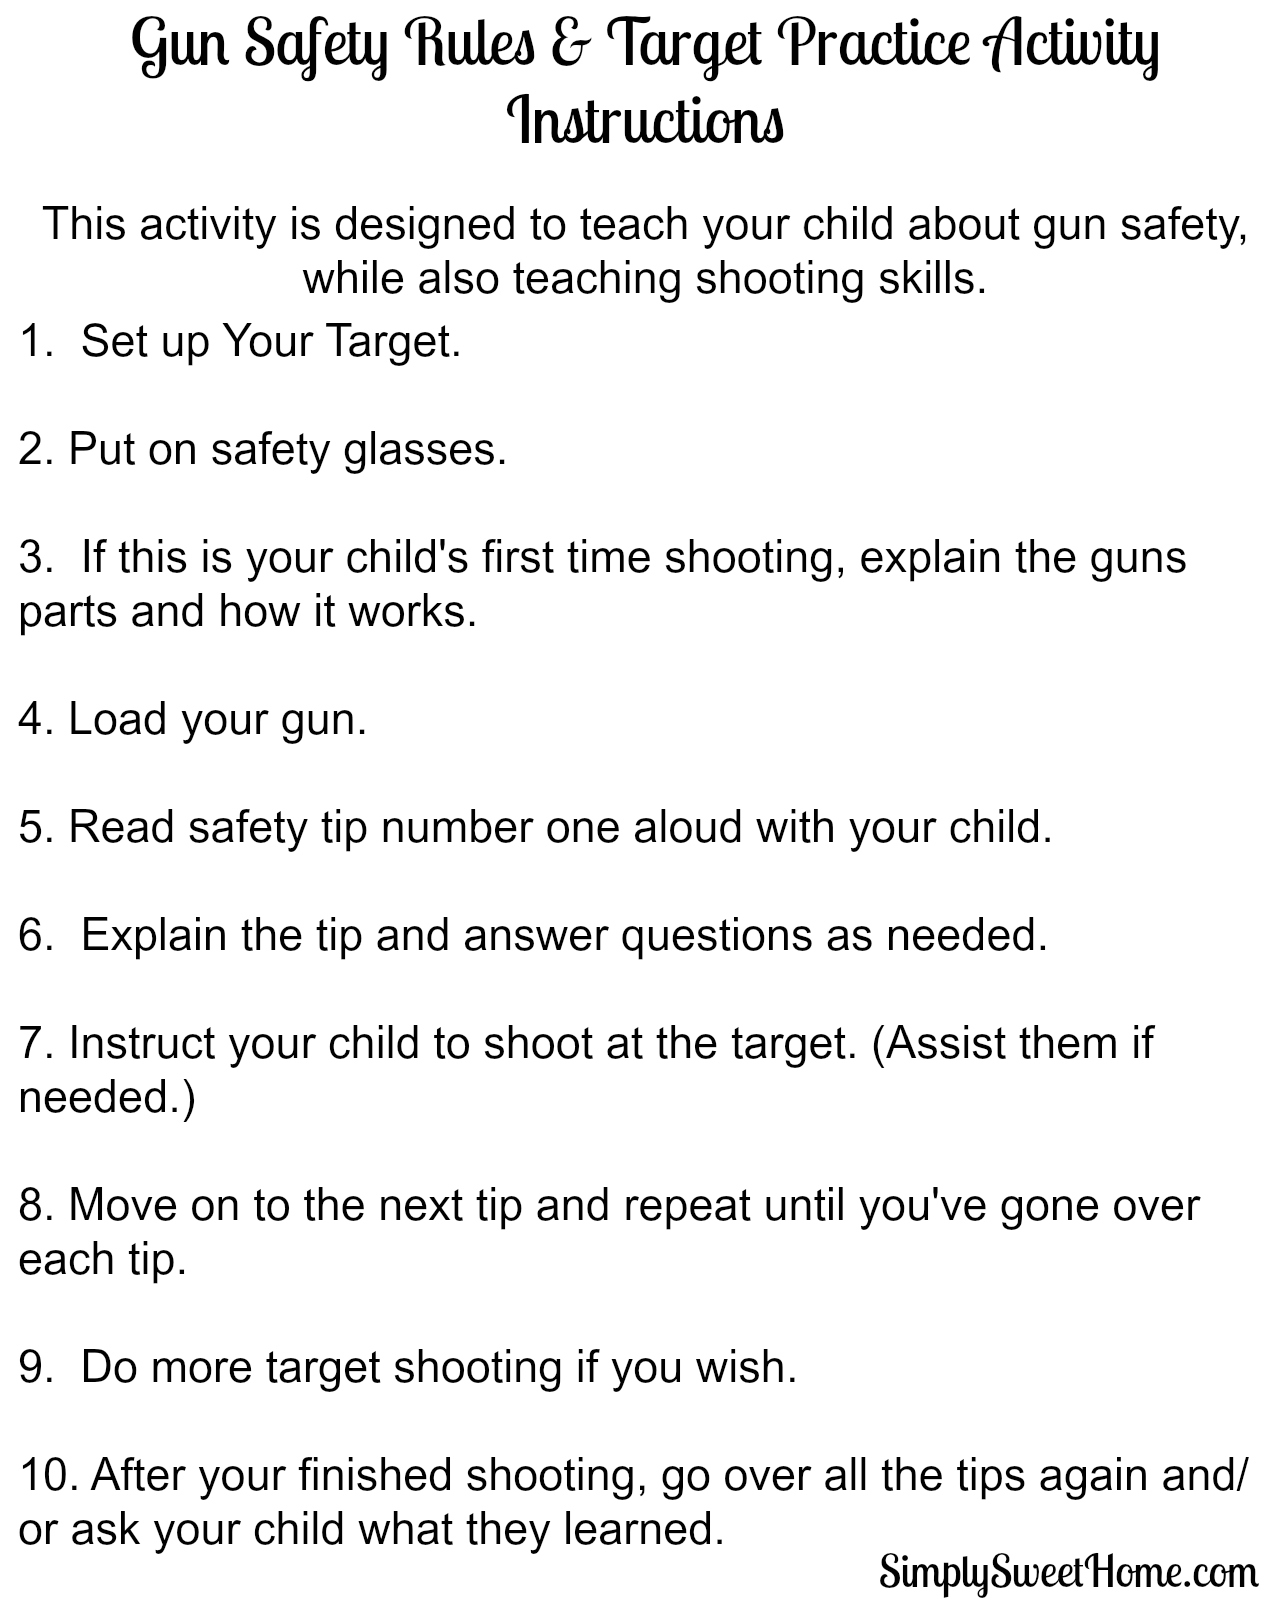 Guns Safety Rules Activity Instructions.jpg